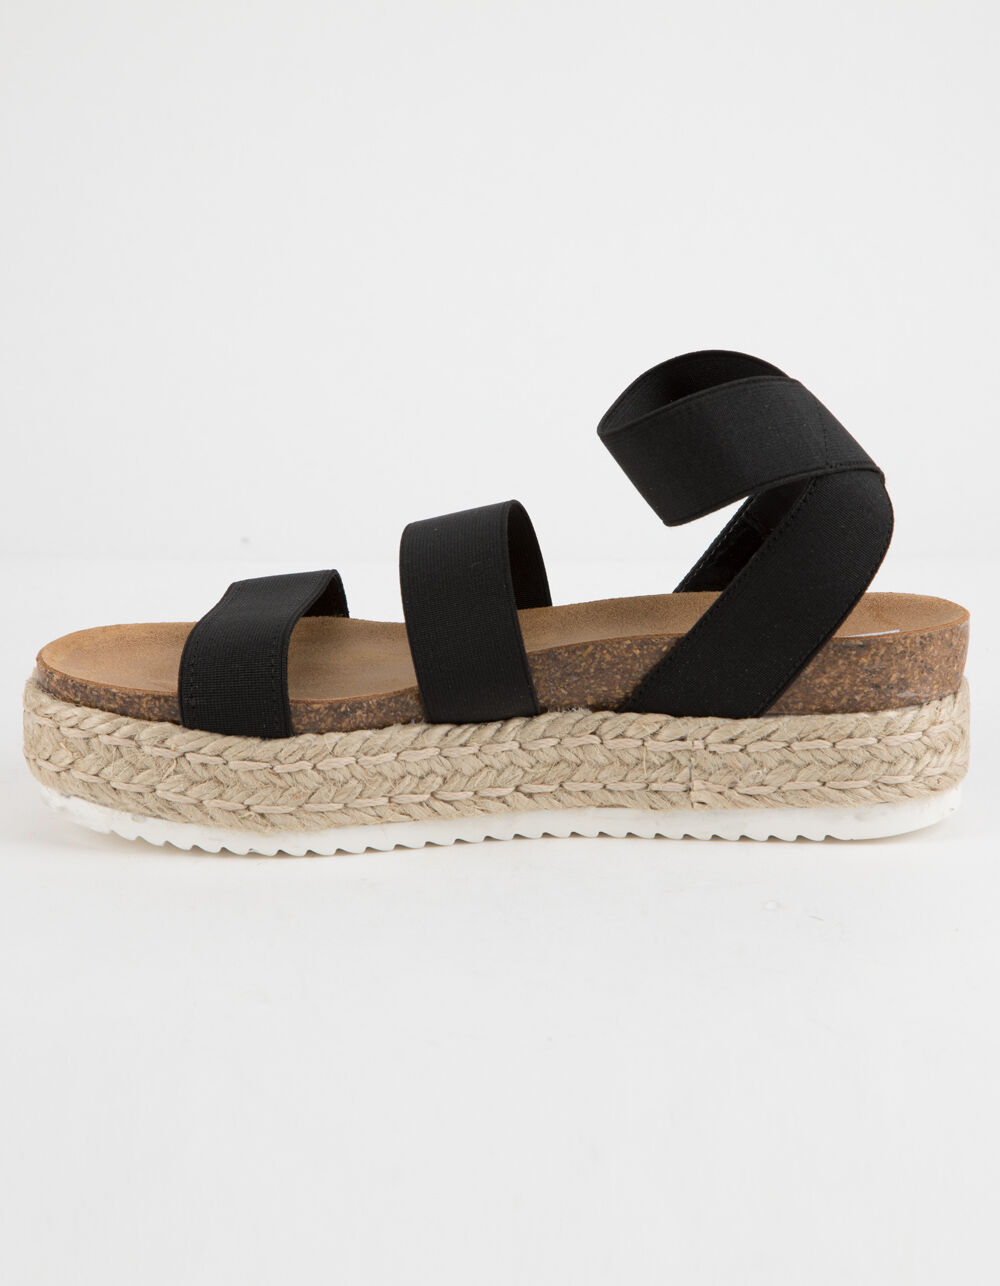 STEVE MADDEN Kimmie Womens Platform Espadrille Sandals - BLACK | Tillys